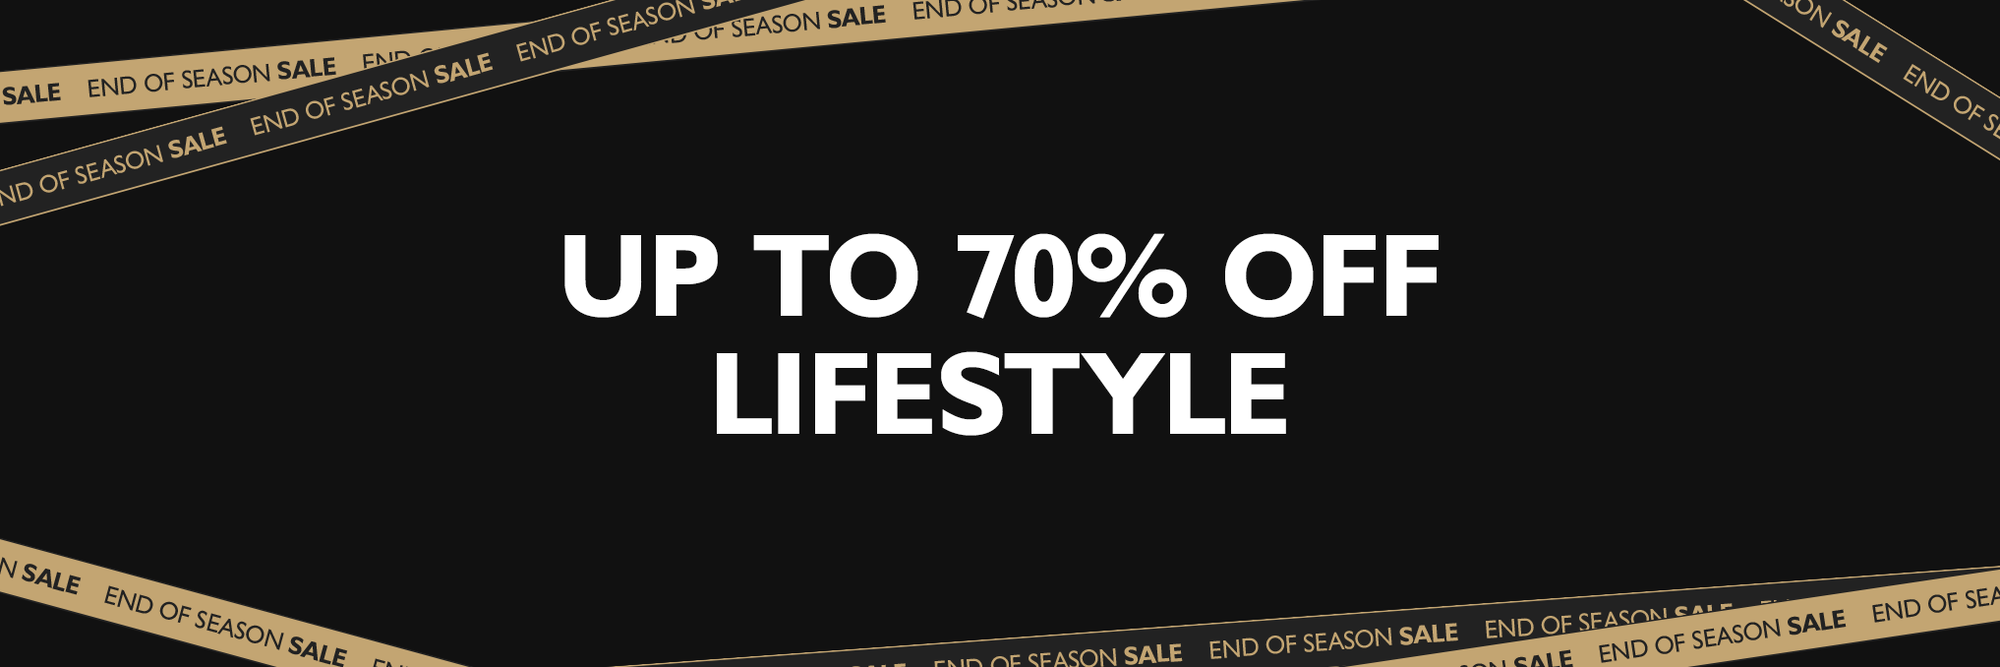 23/24 End of Season Sale - 70% off Lifestyle